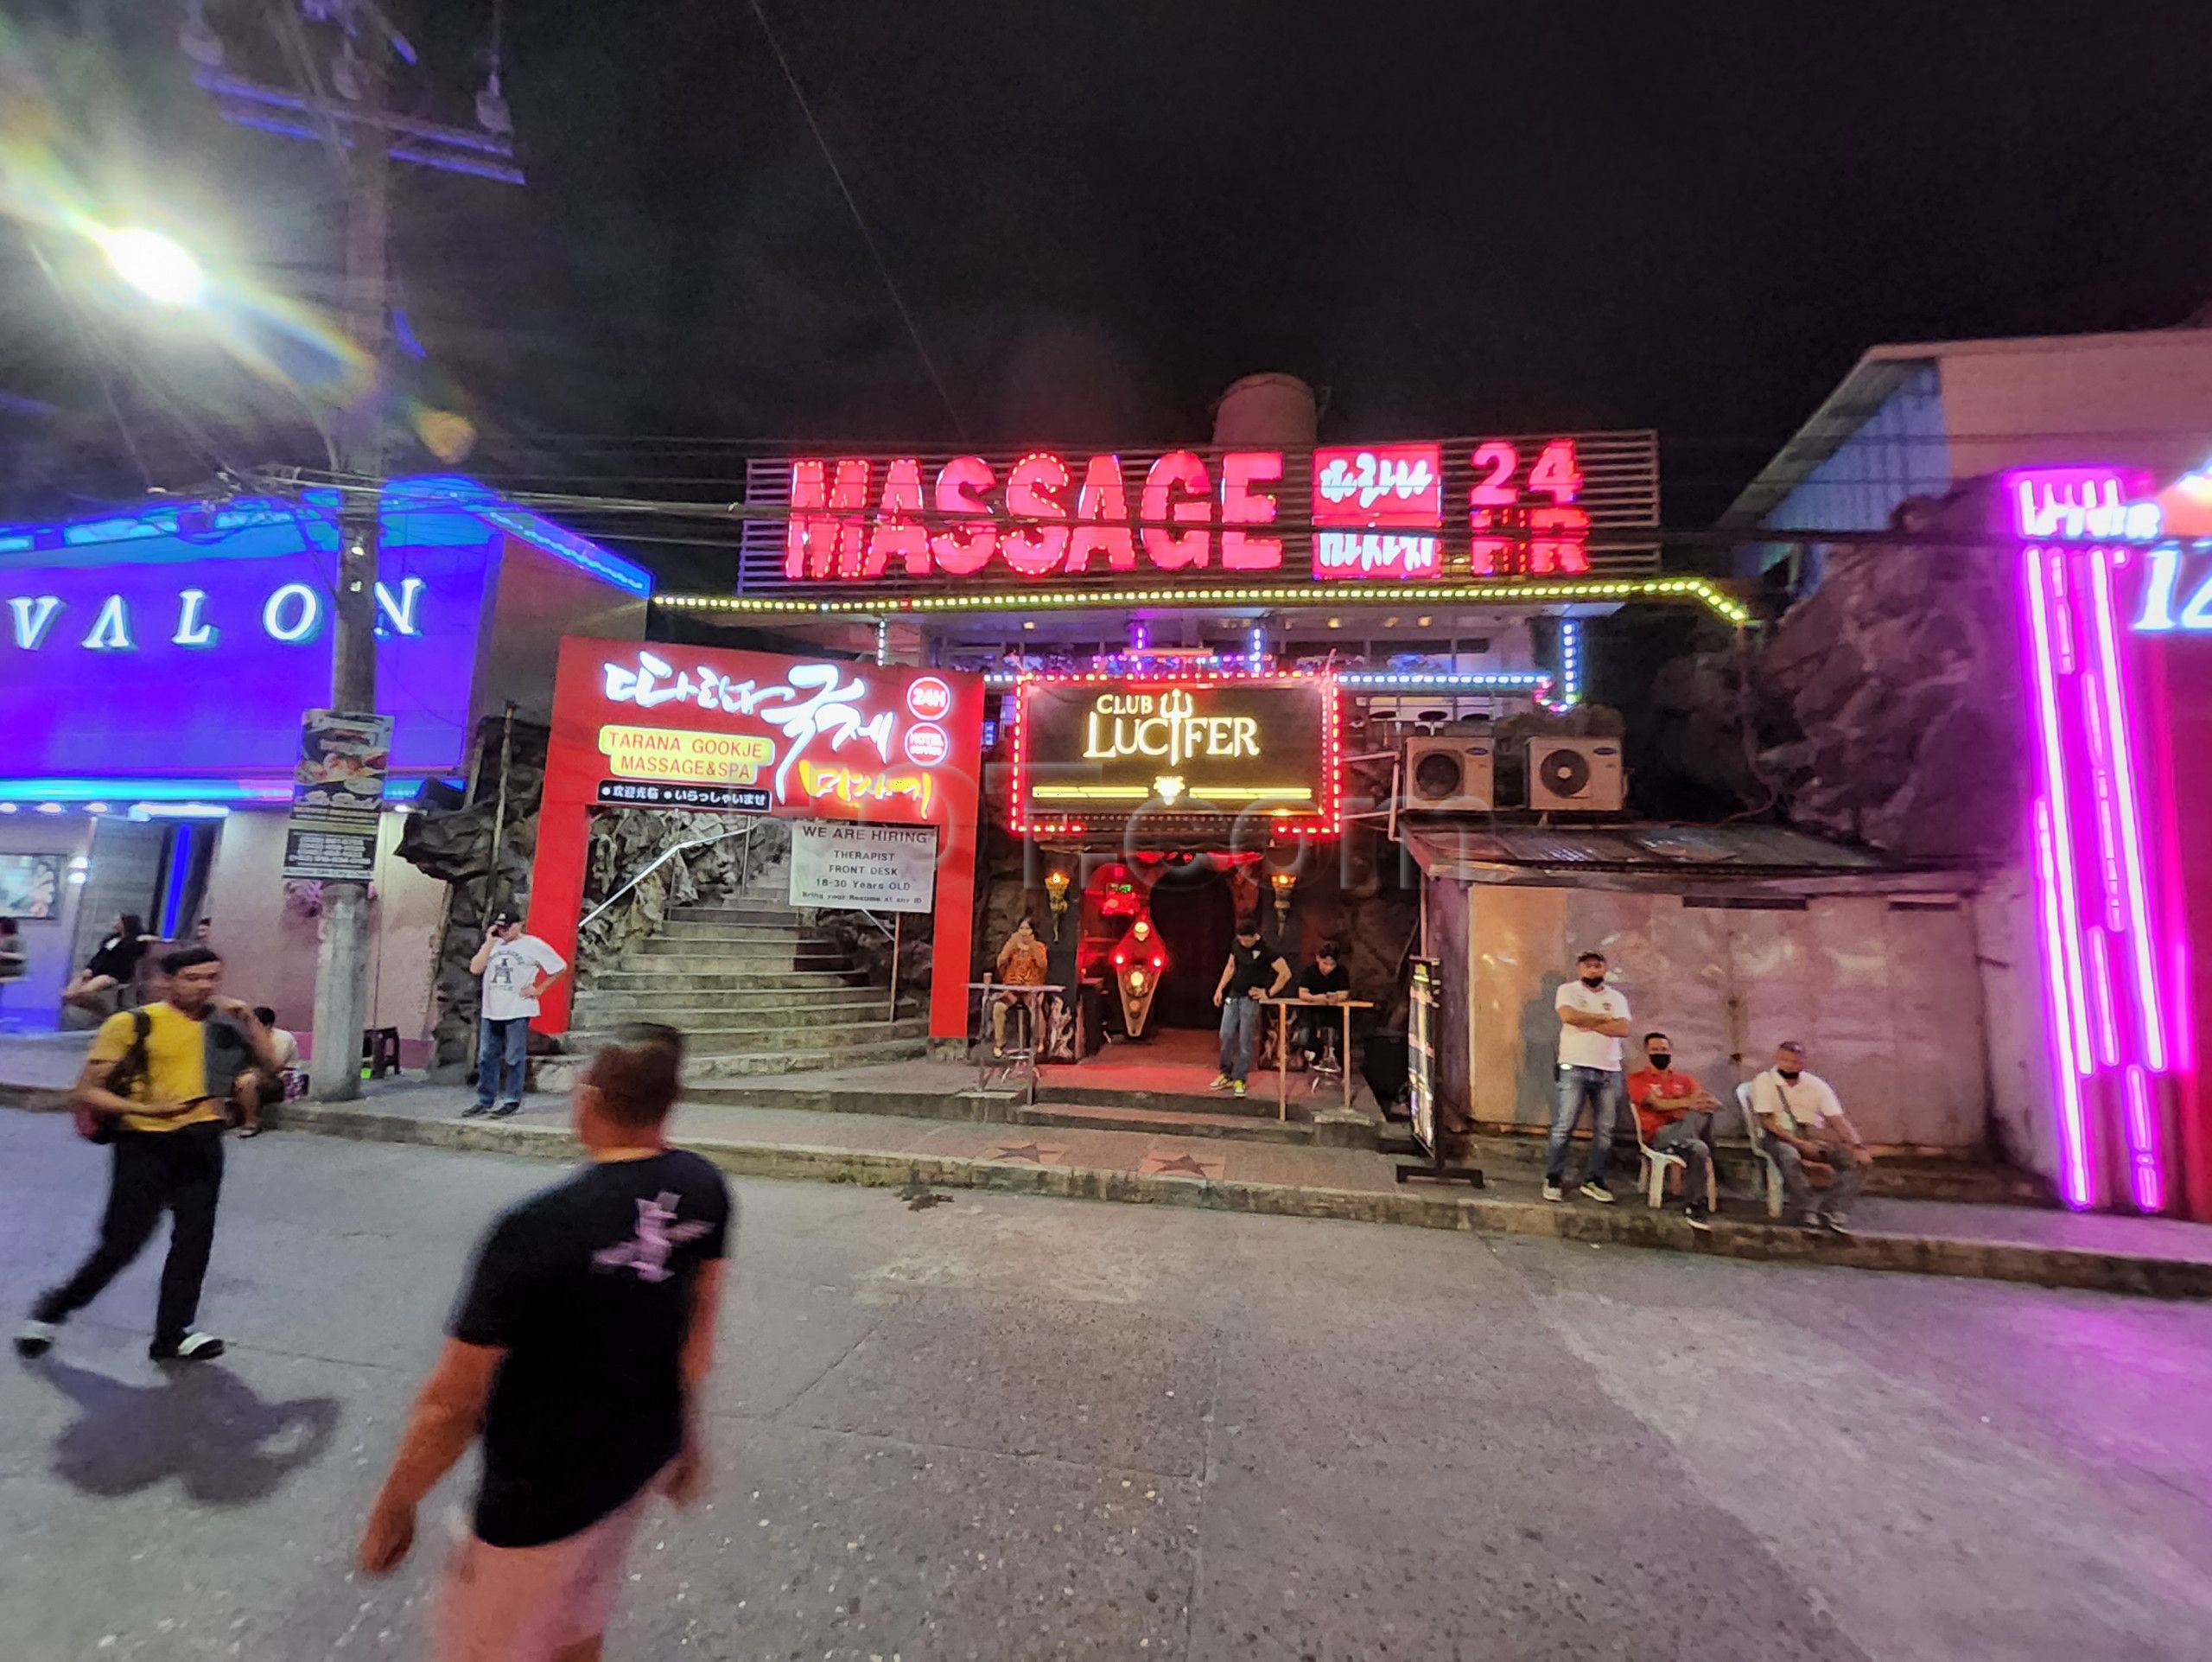 Angeles City, Philippines Tarana Gookje Massage and Spa